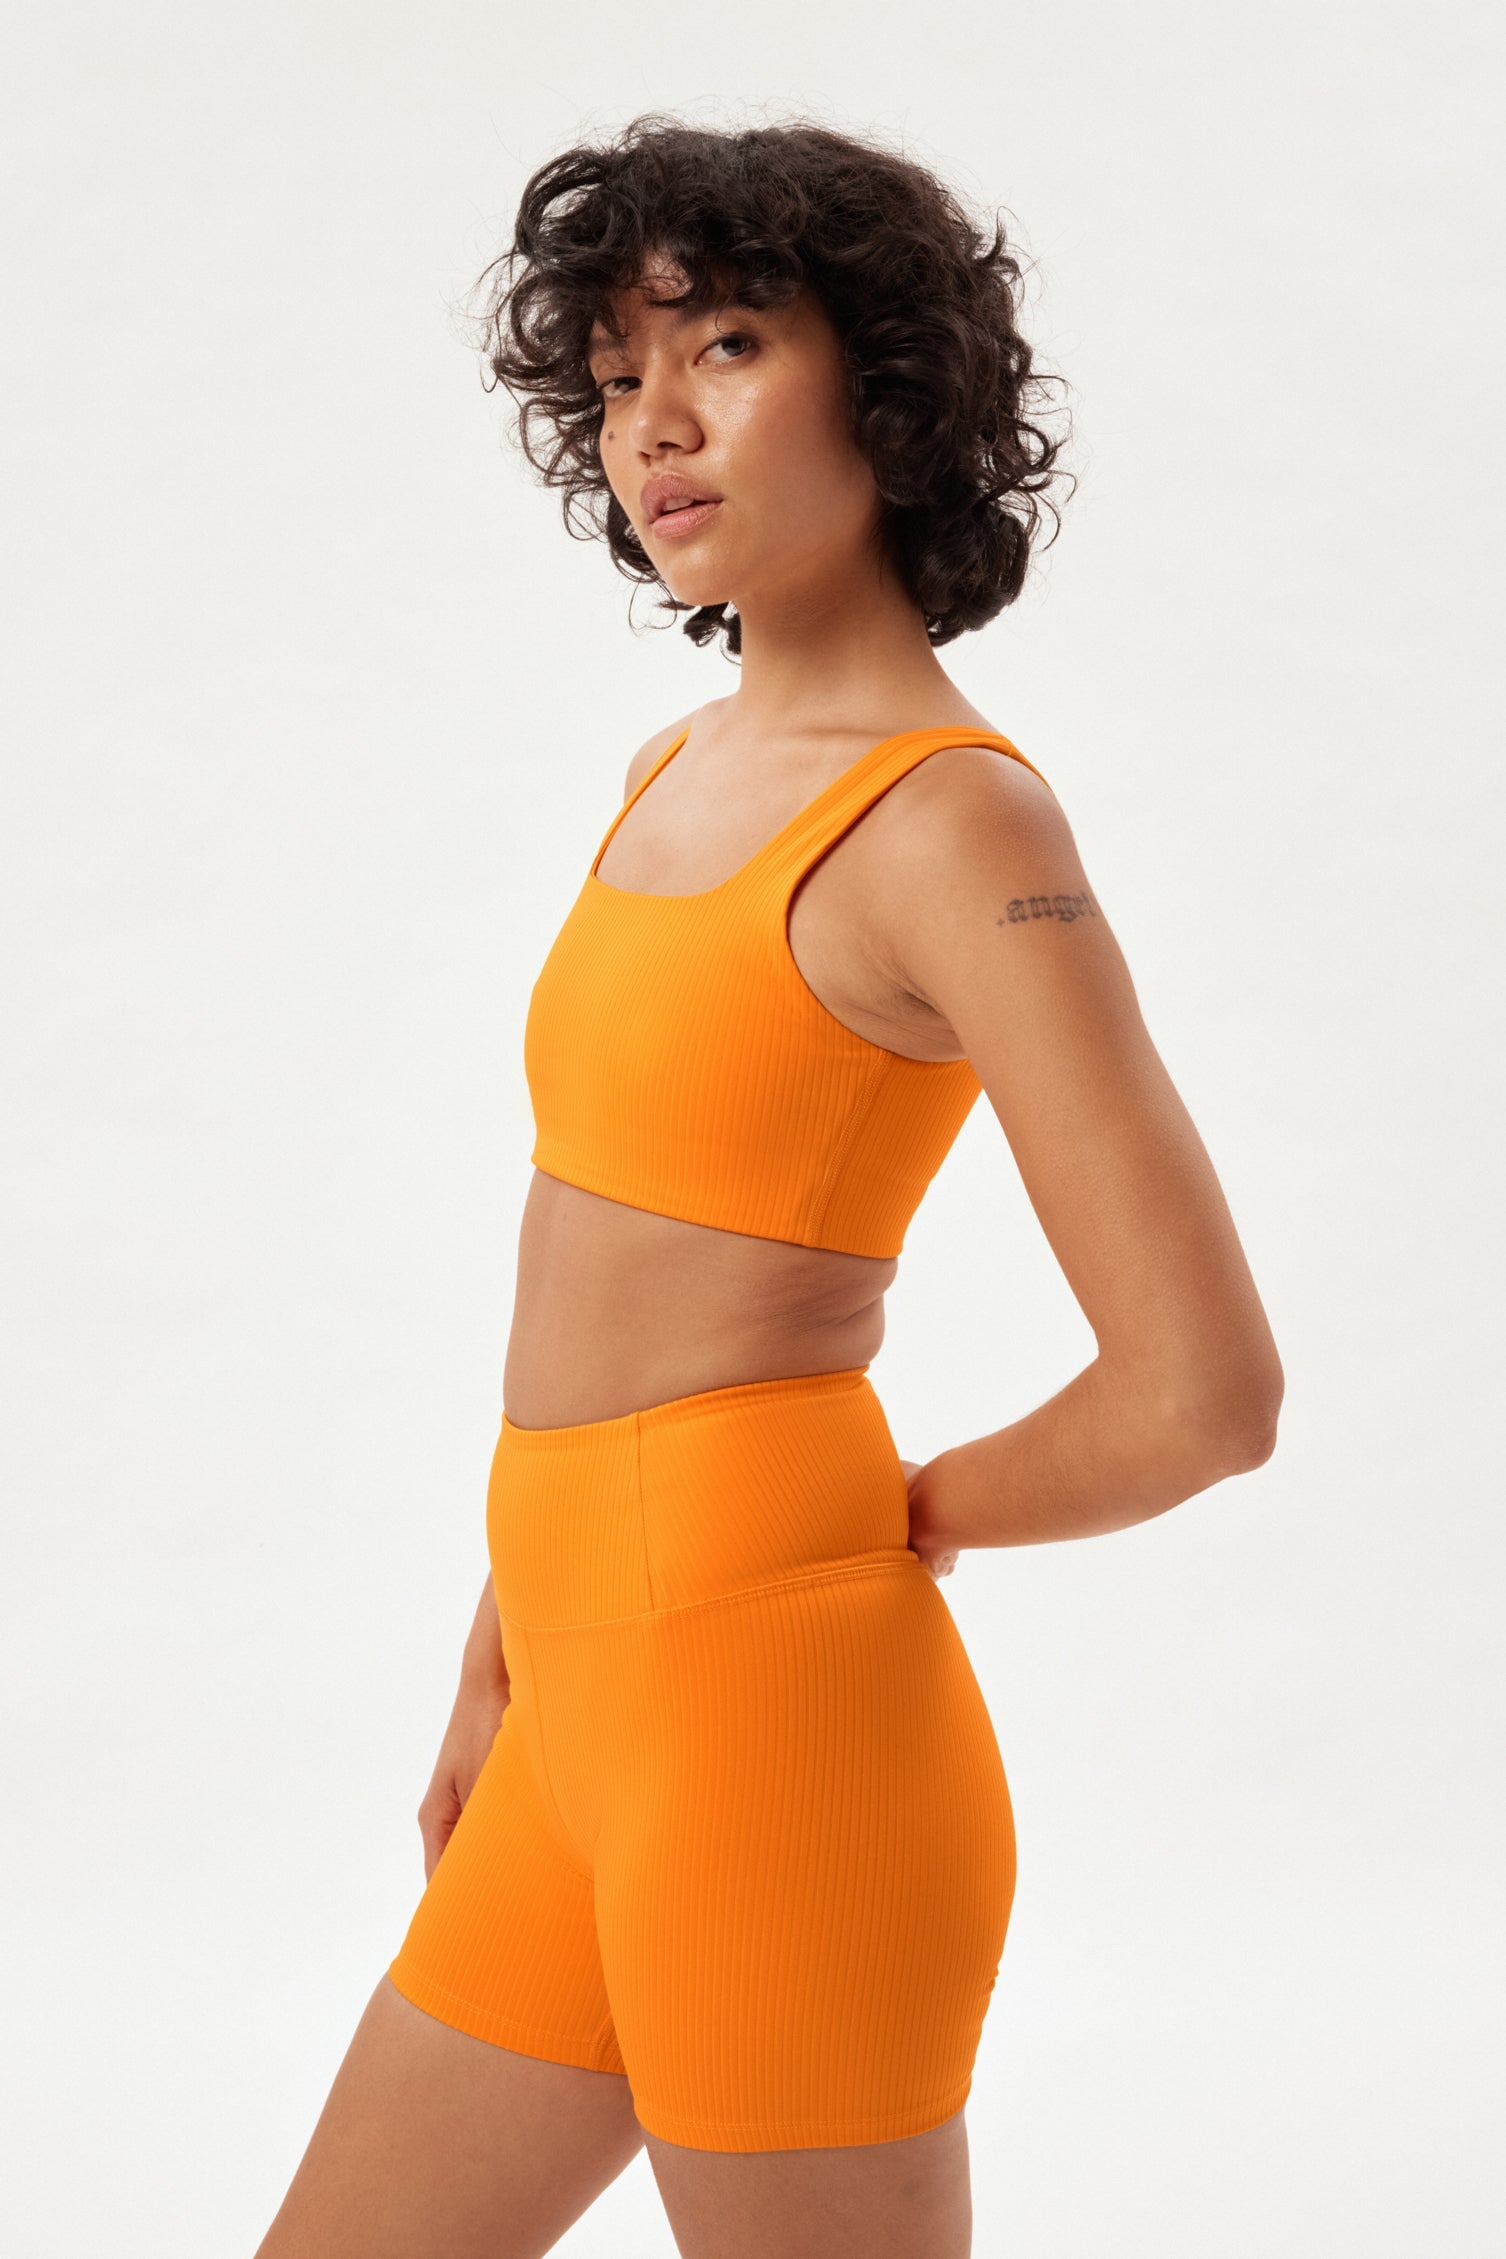 $42 Girlfriend Collective Women's Black Tommy Square Neck Sports Bra Size  XS